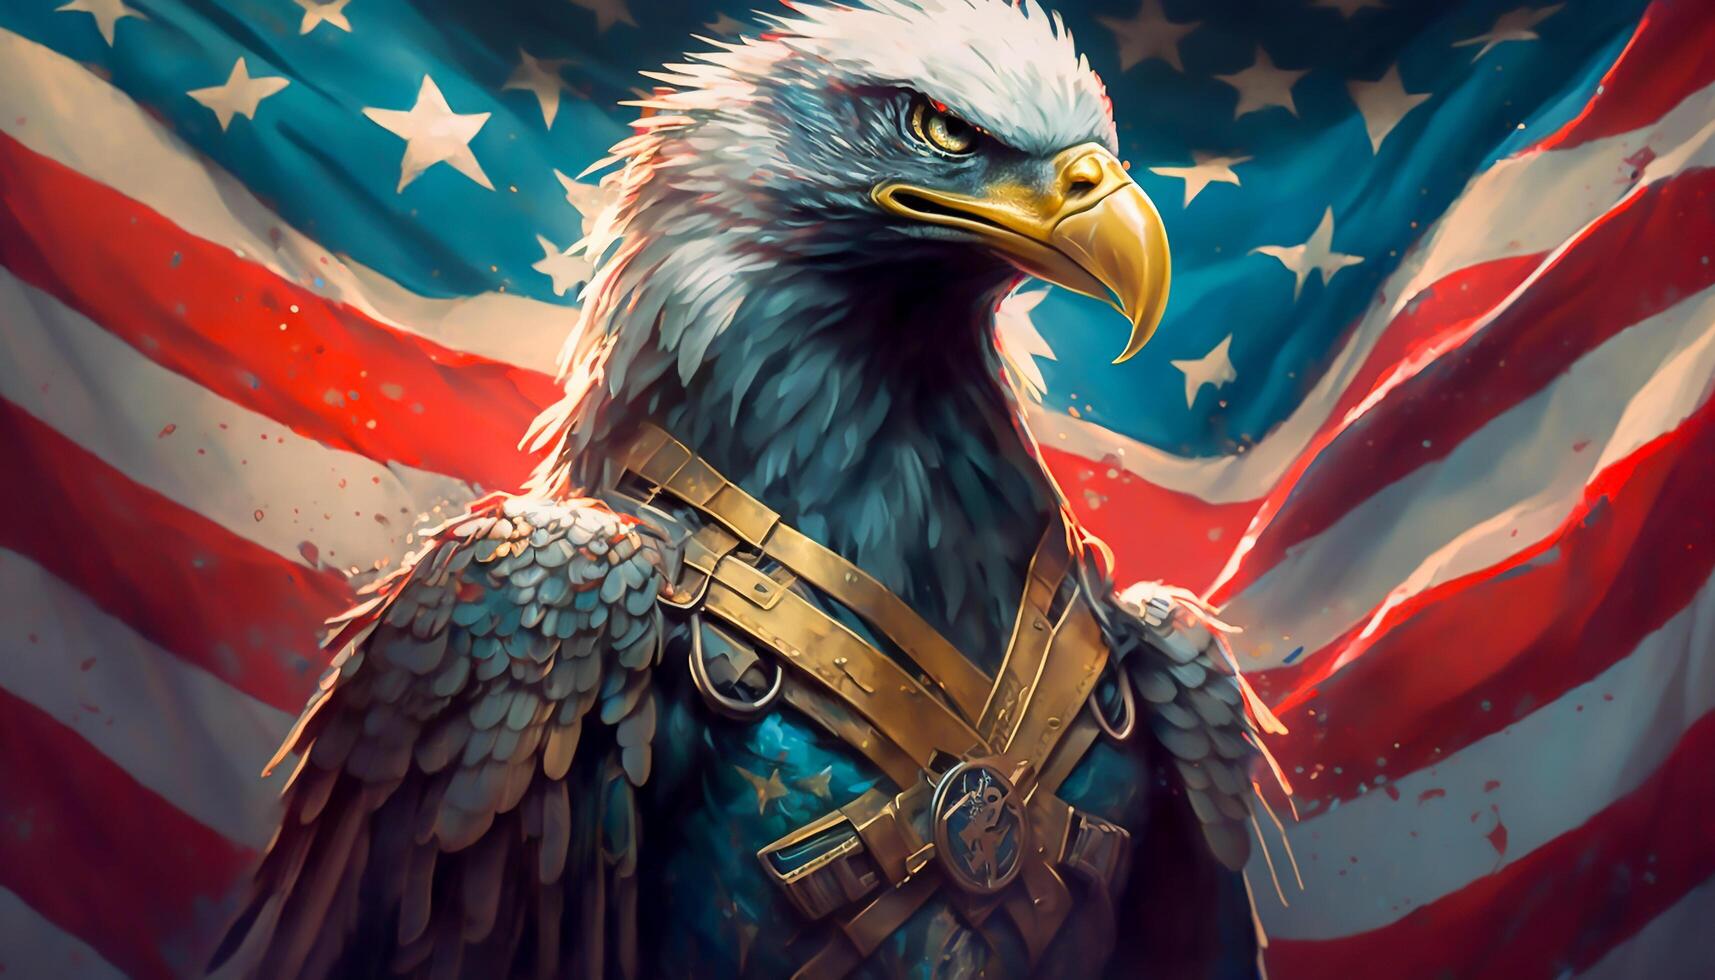 super hero eagle cover with USA flag, photo